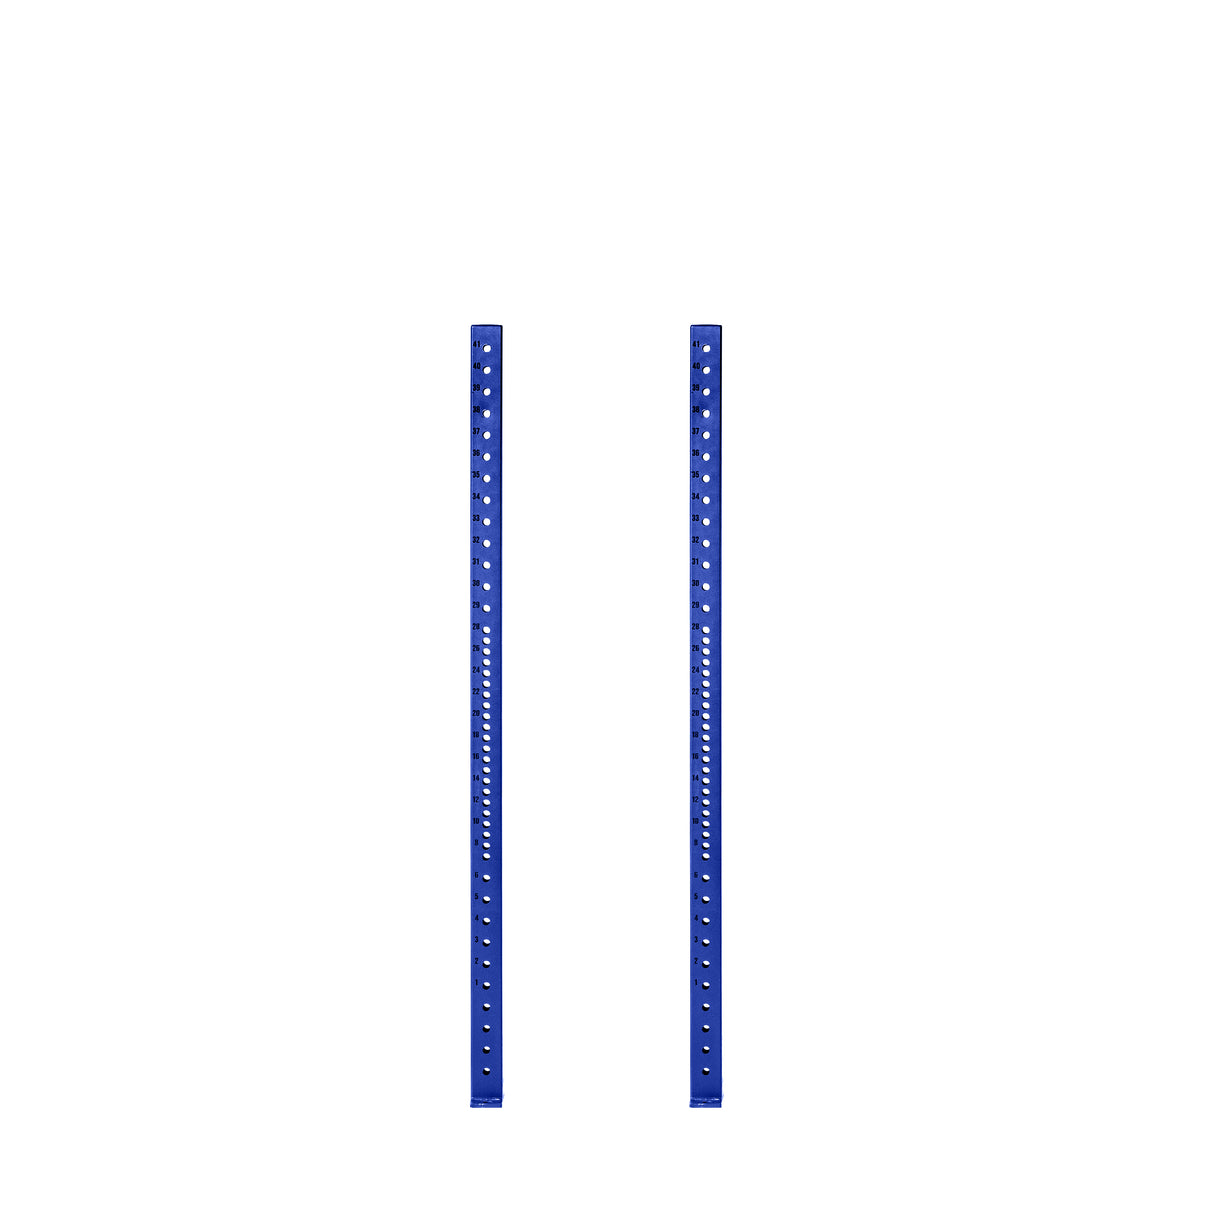 Hydra Uprights - 84" Blue (Pair)